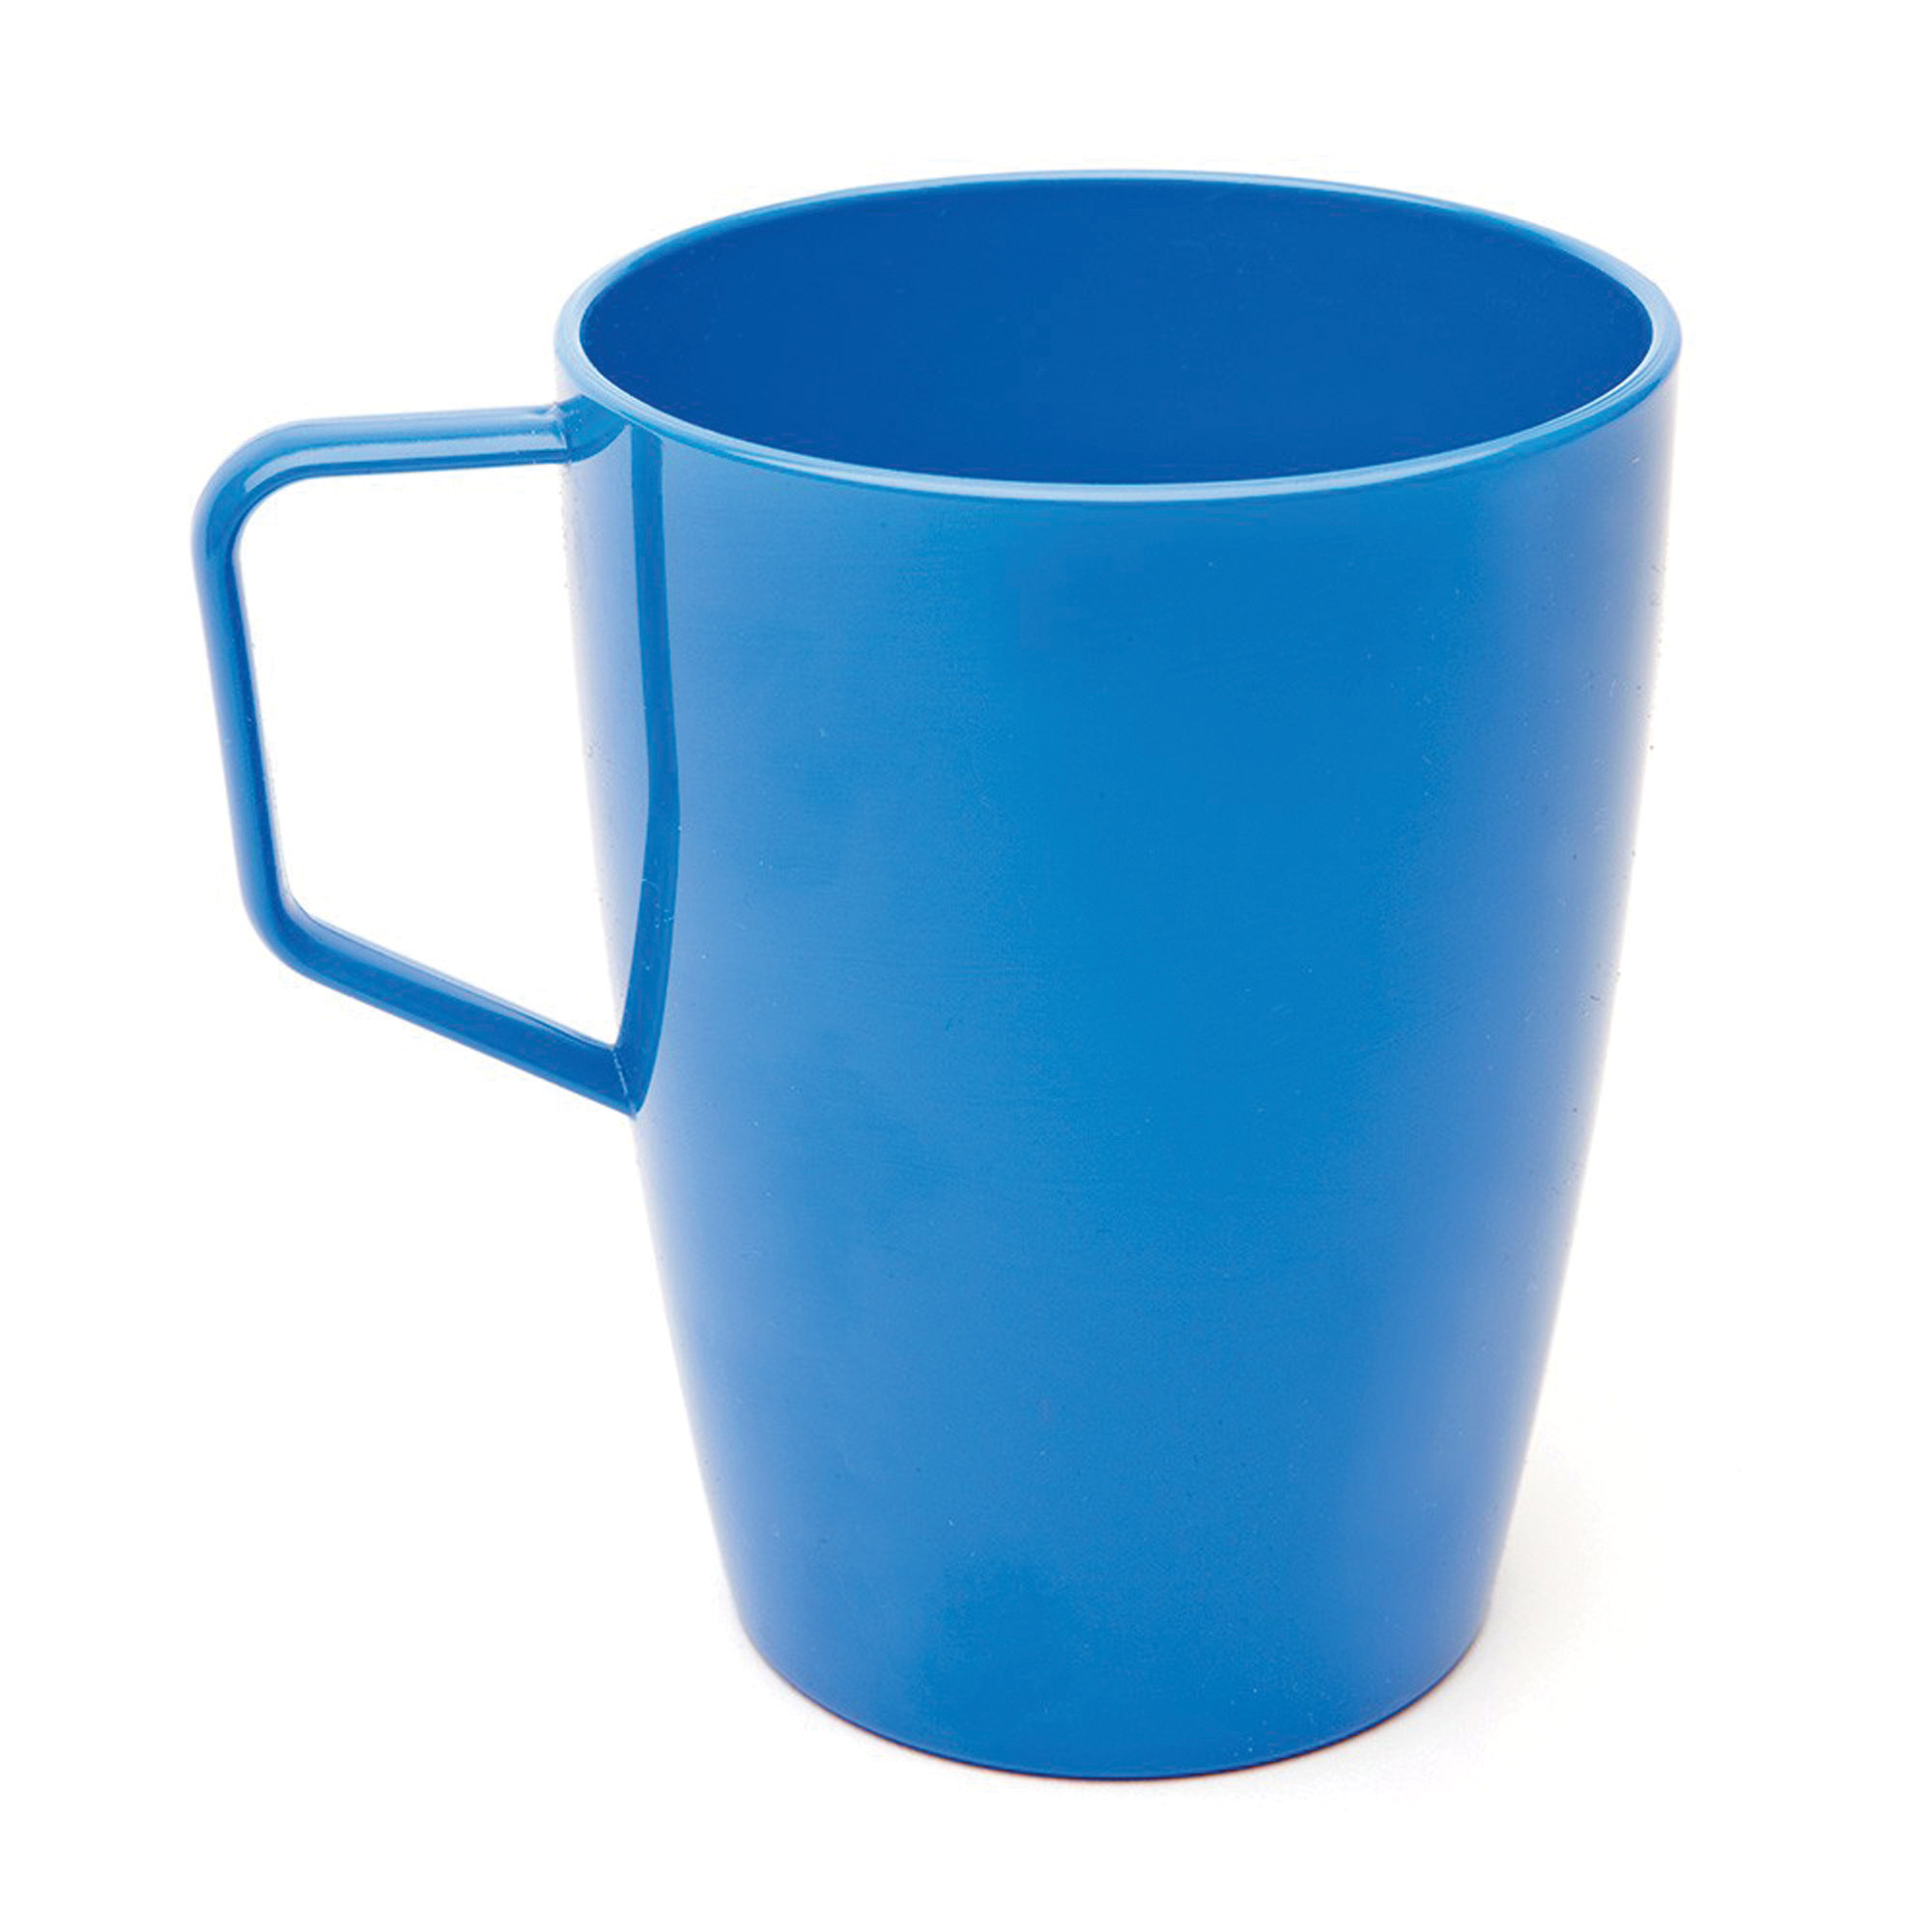 Polycarbonate Mug Med Blue 28cl - Each | Shop | Countrywide Healthcare